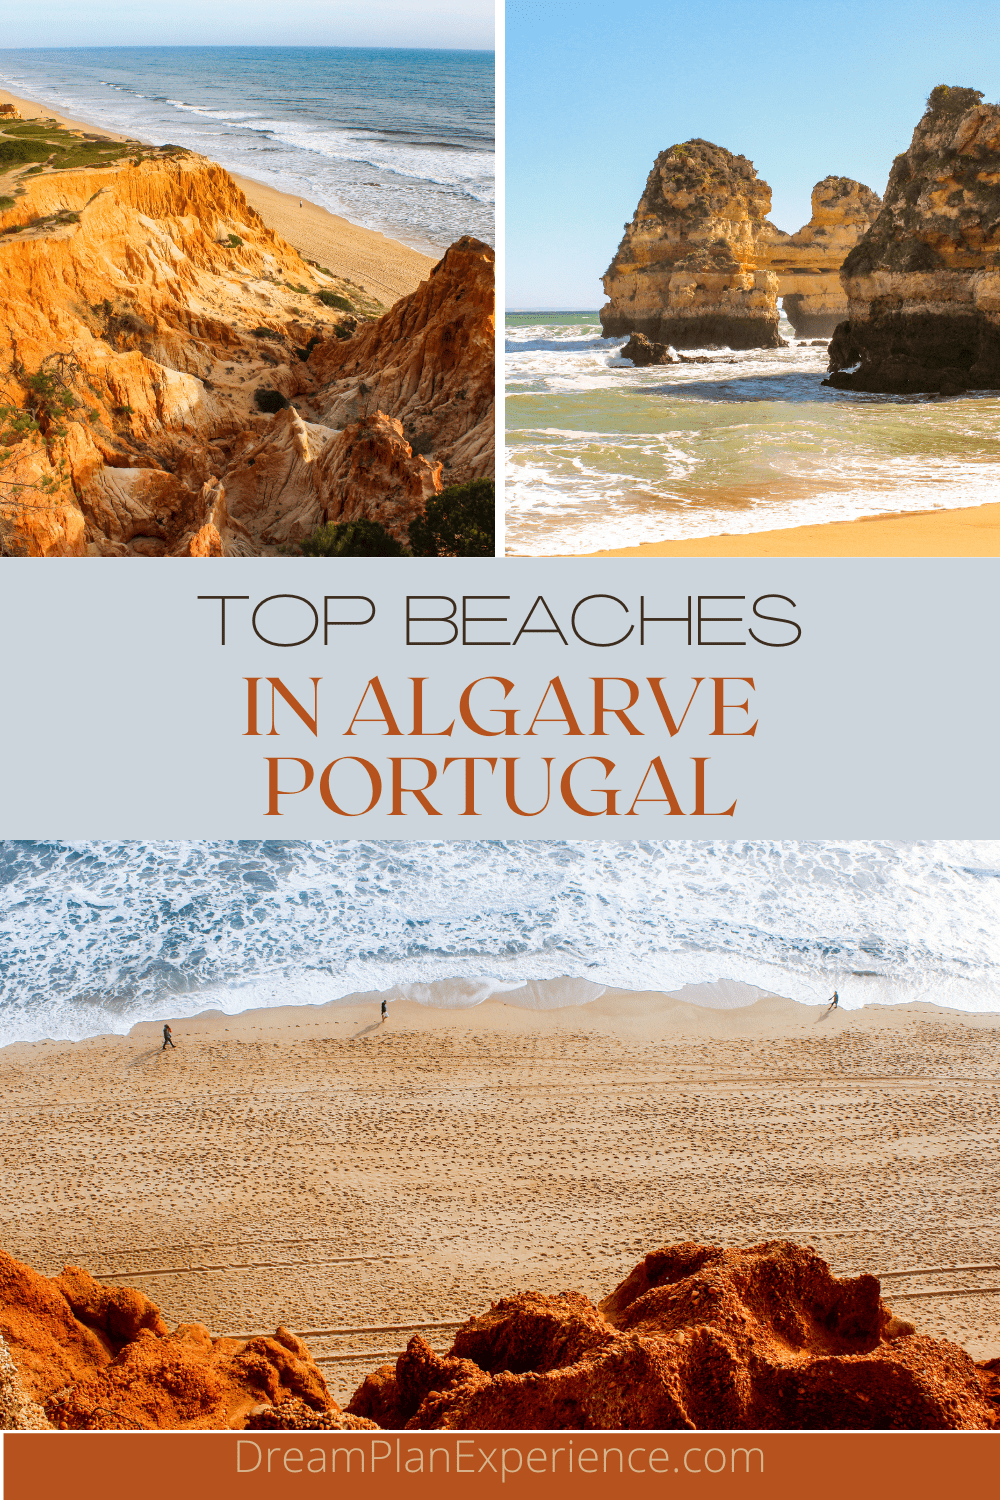 BEACHES IN ALGARVE PORTUGAL